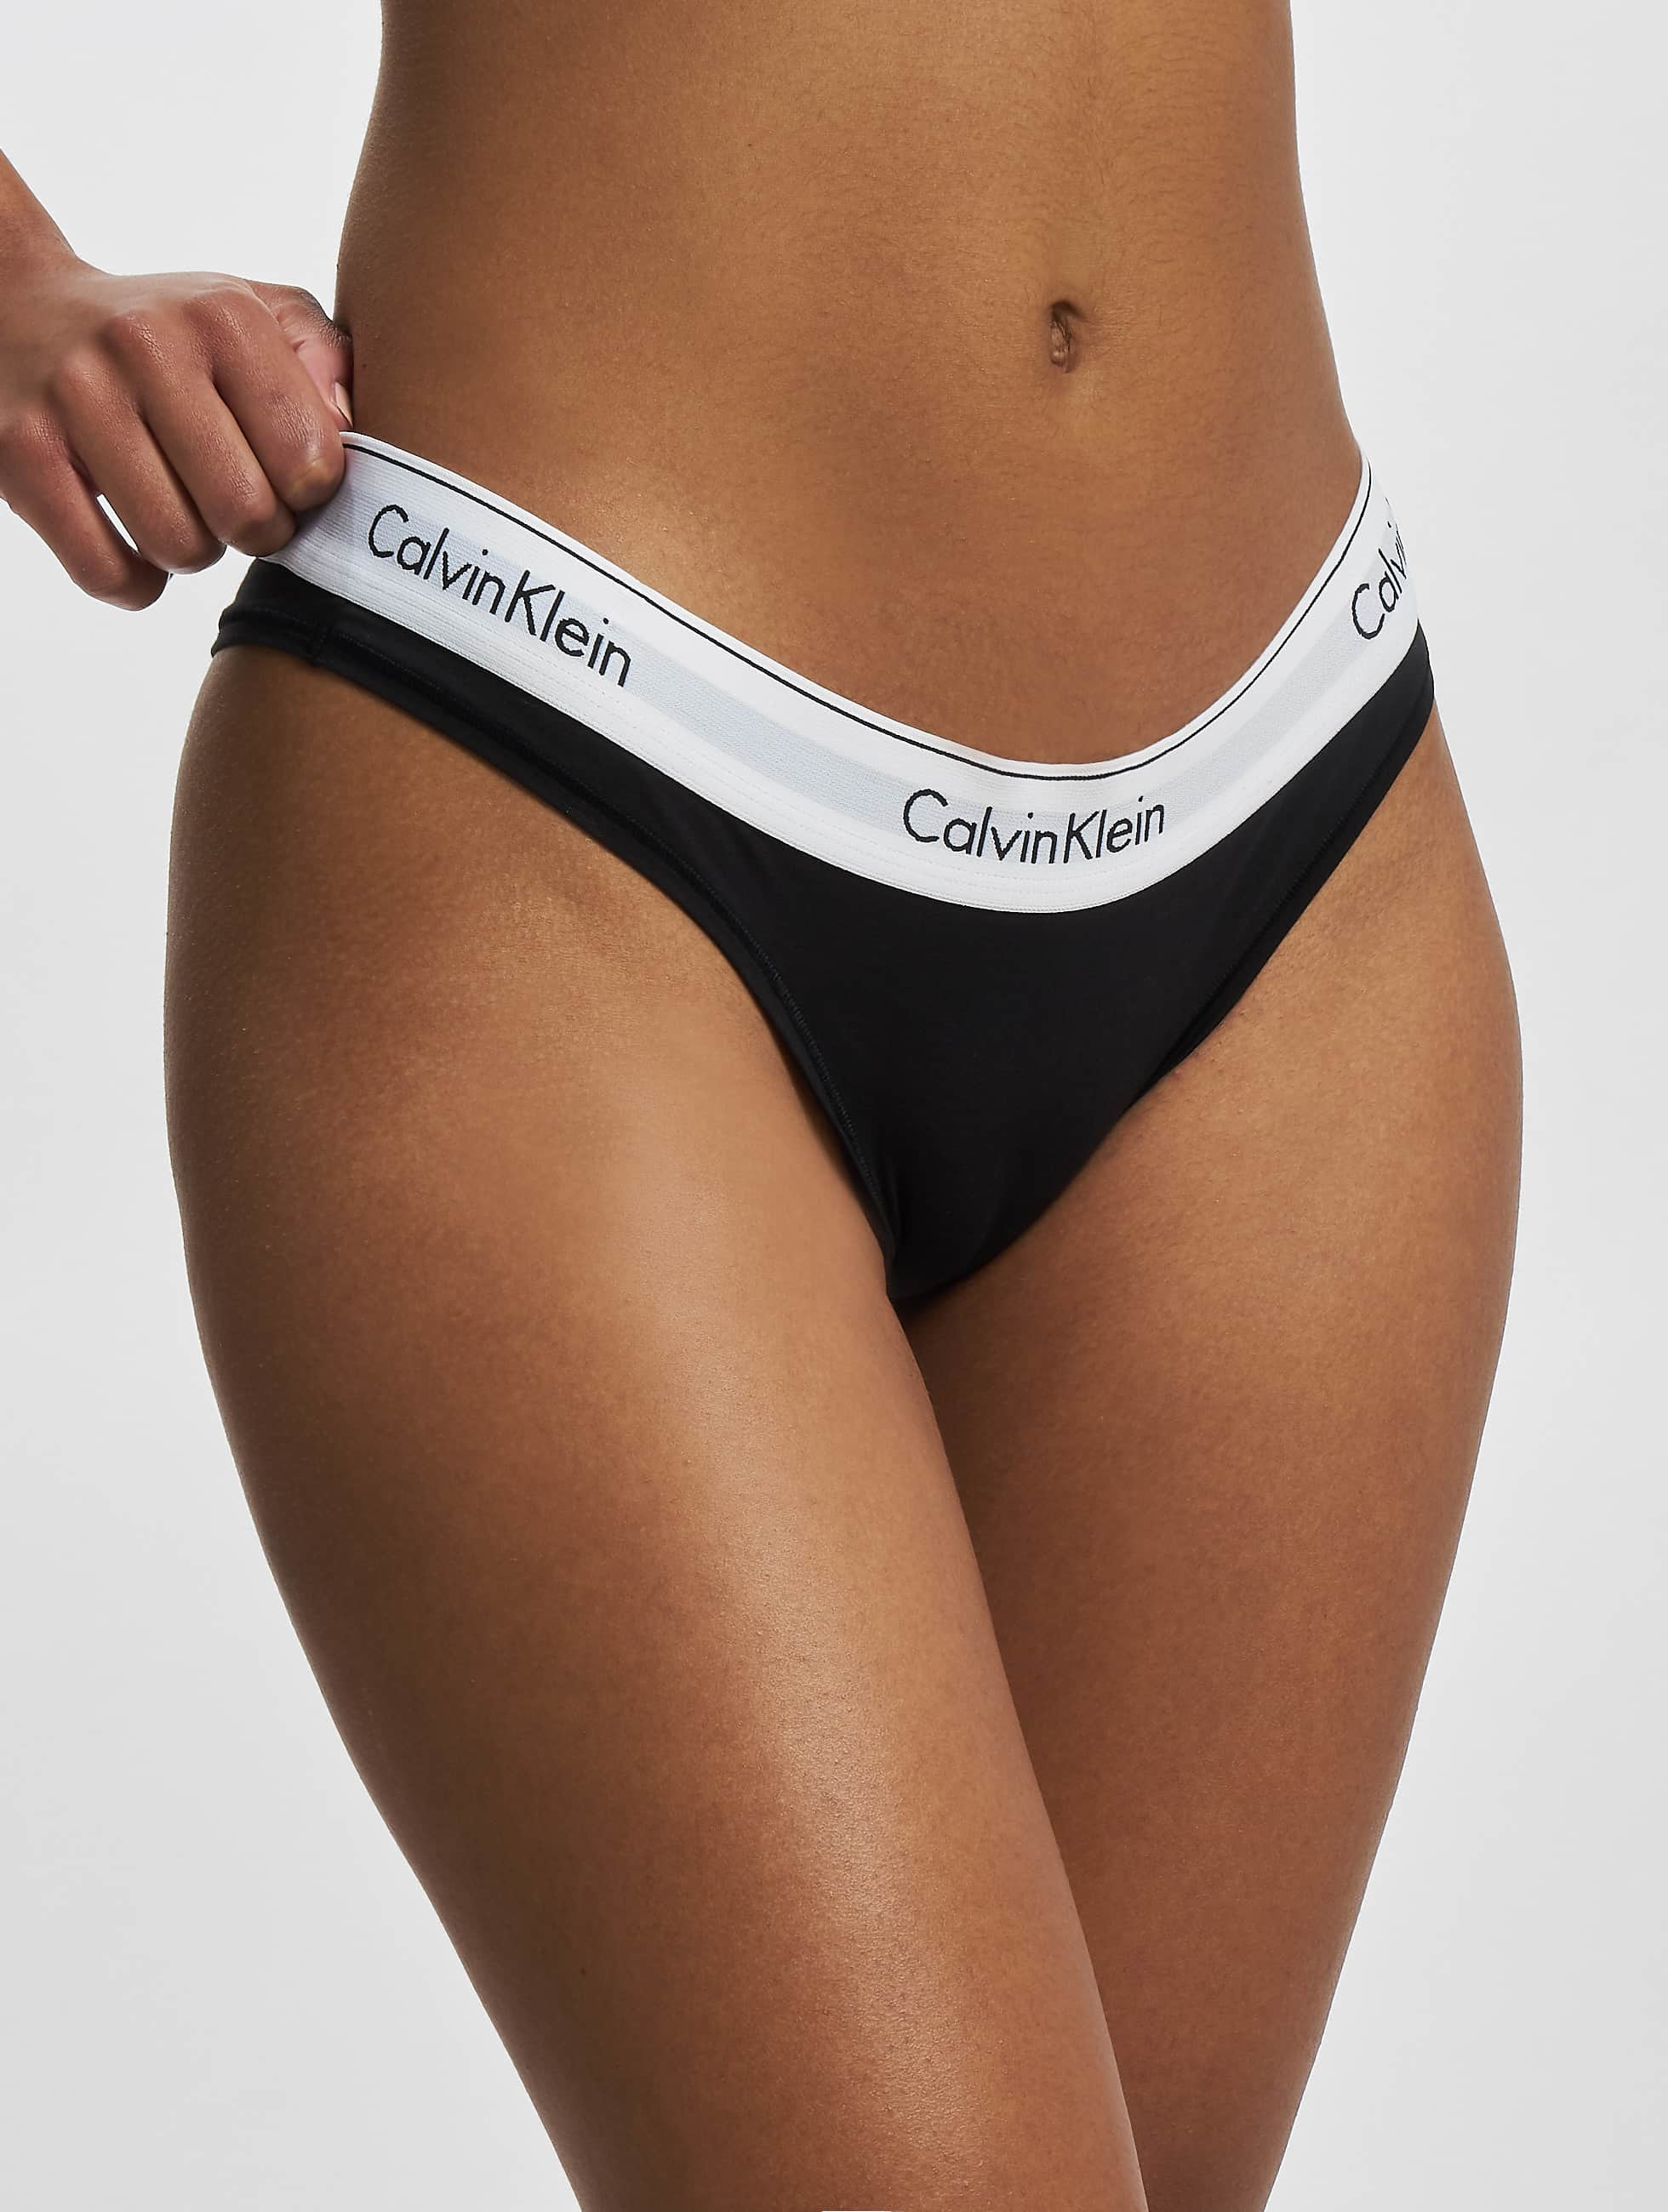 privacy lichten Kustlijn Calvin Klein Ondergoed / Badmode / ondergoed Underwear Brazilian in zwart  972280